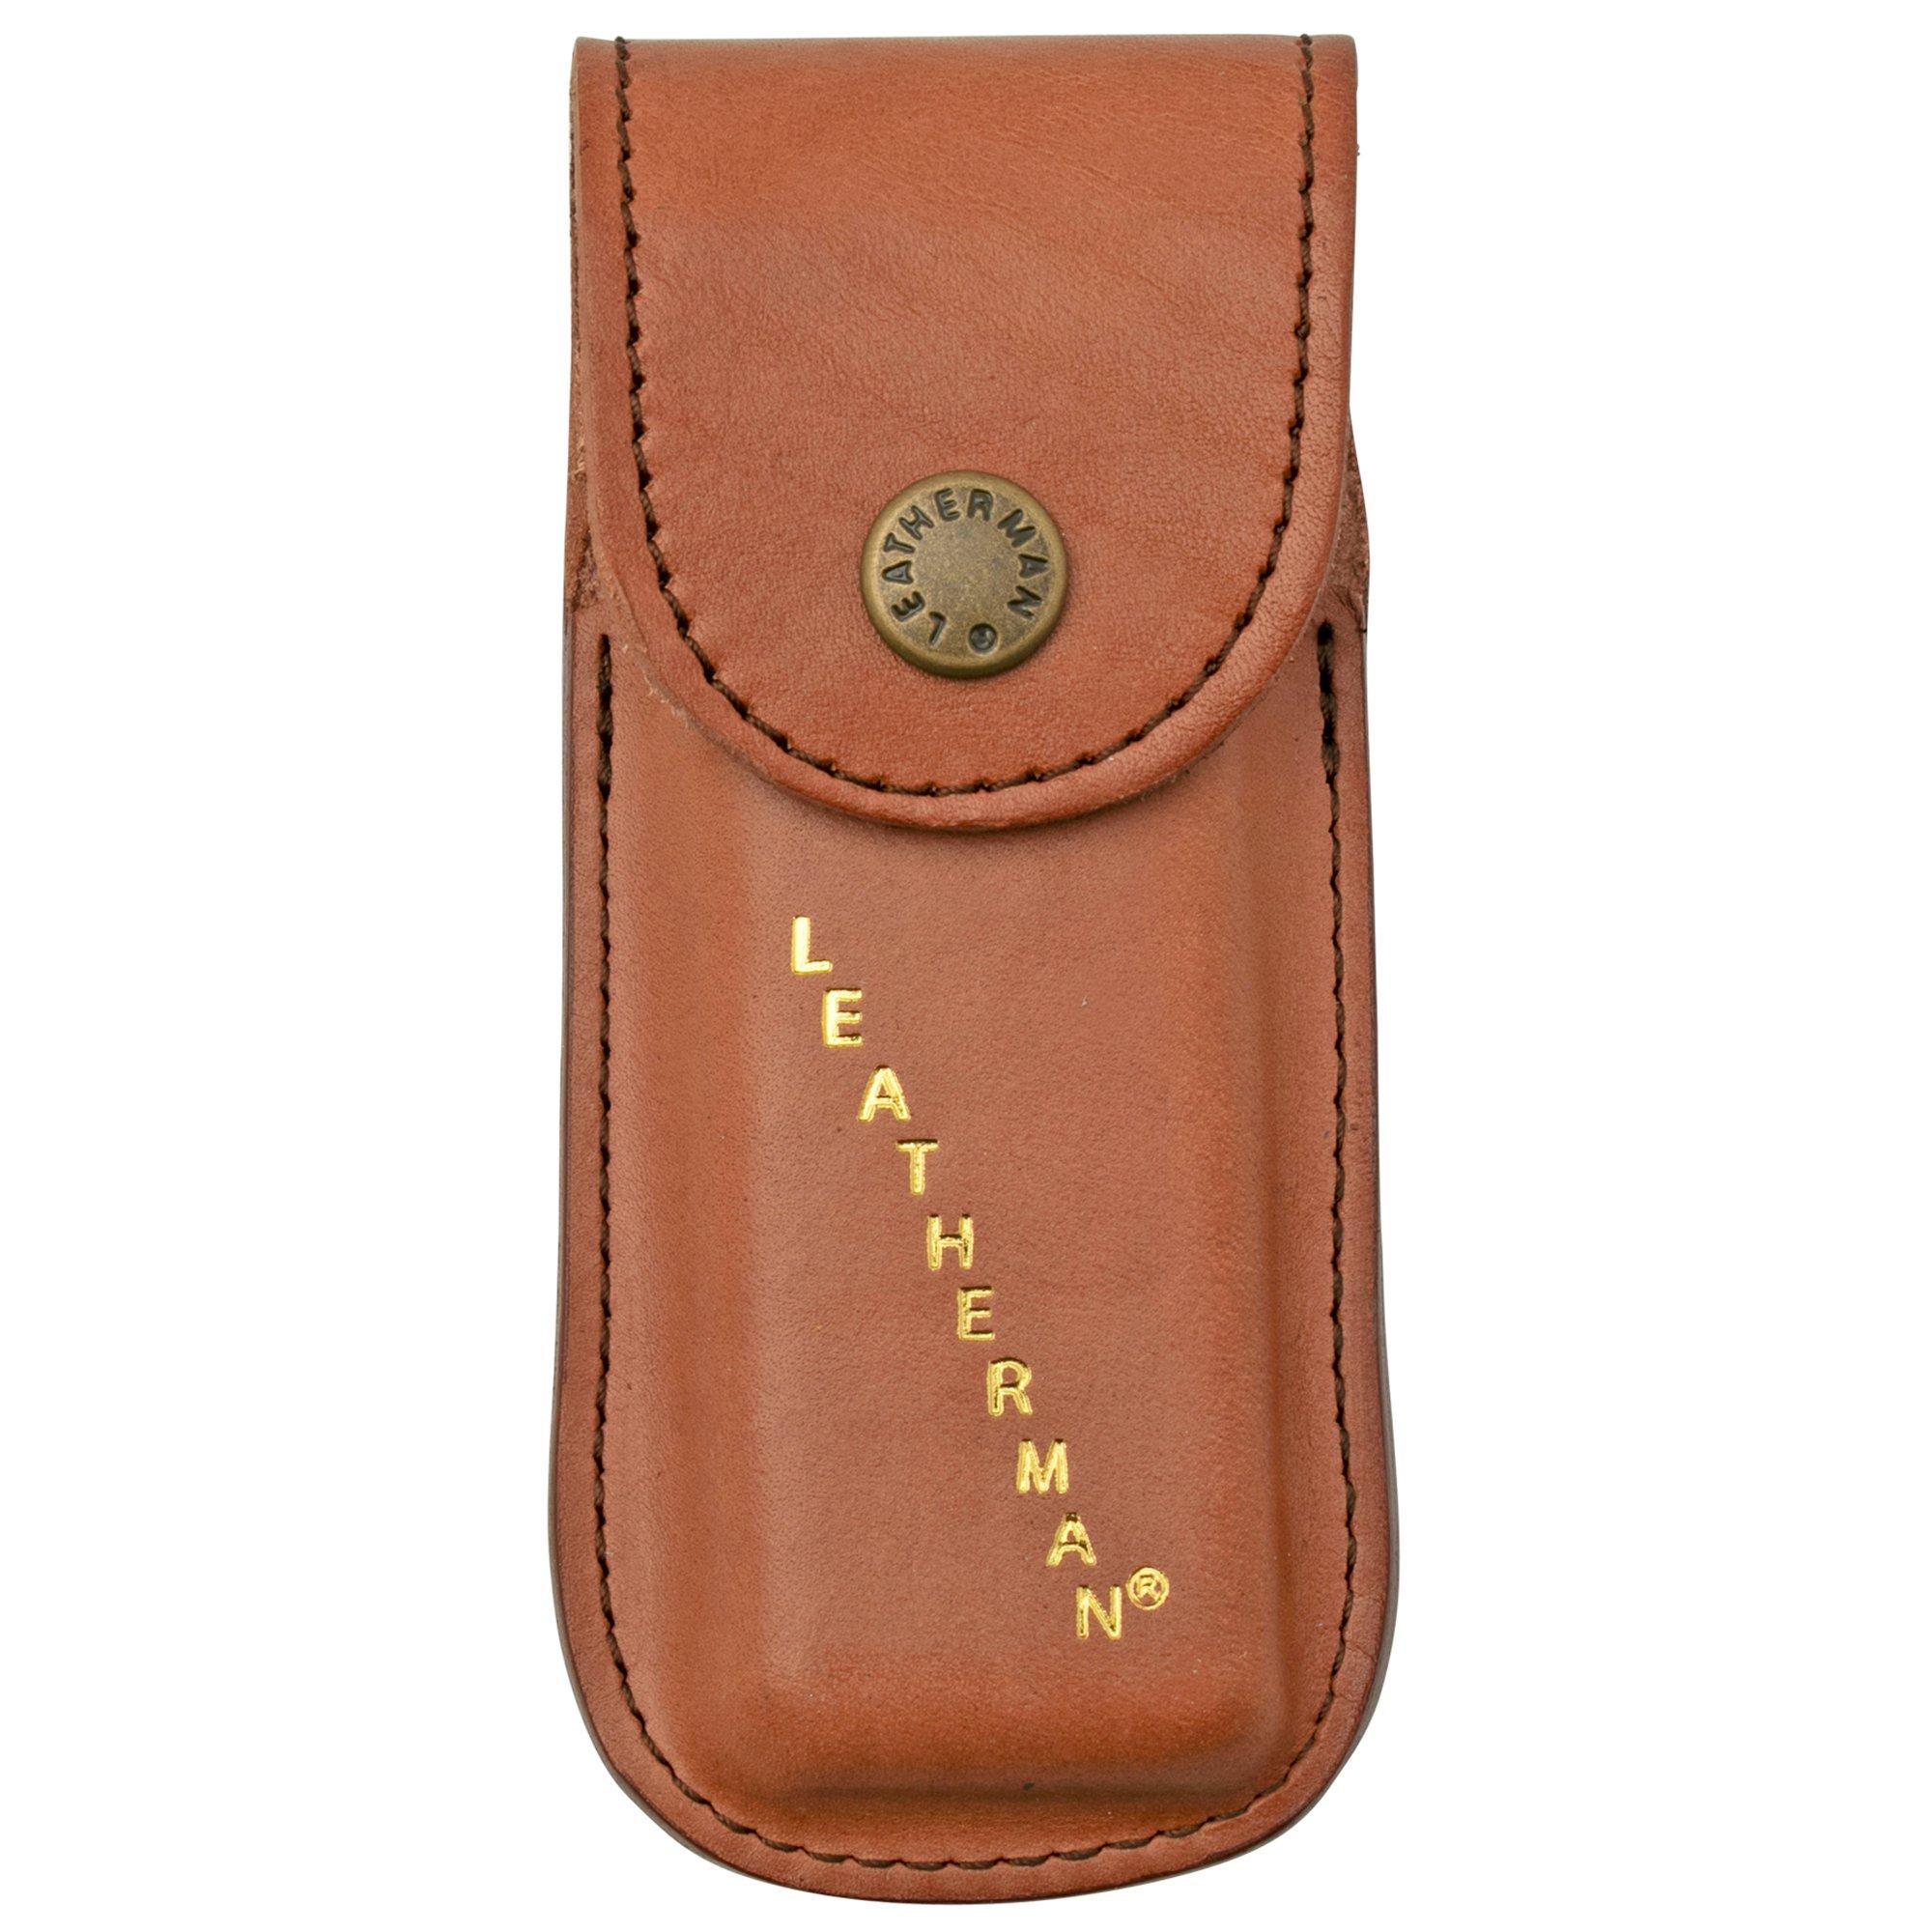 Leatherman Heritage Sheath Small, leather belt sheath 832593